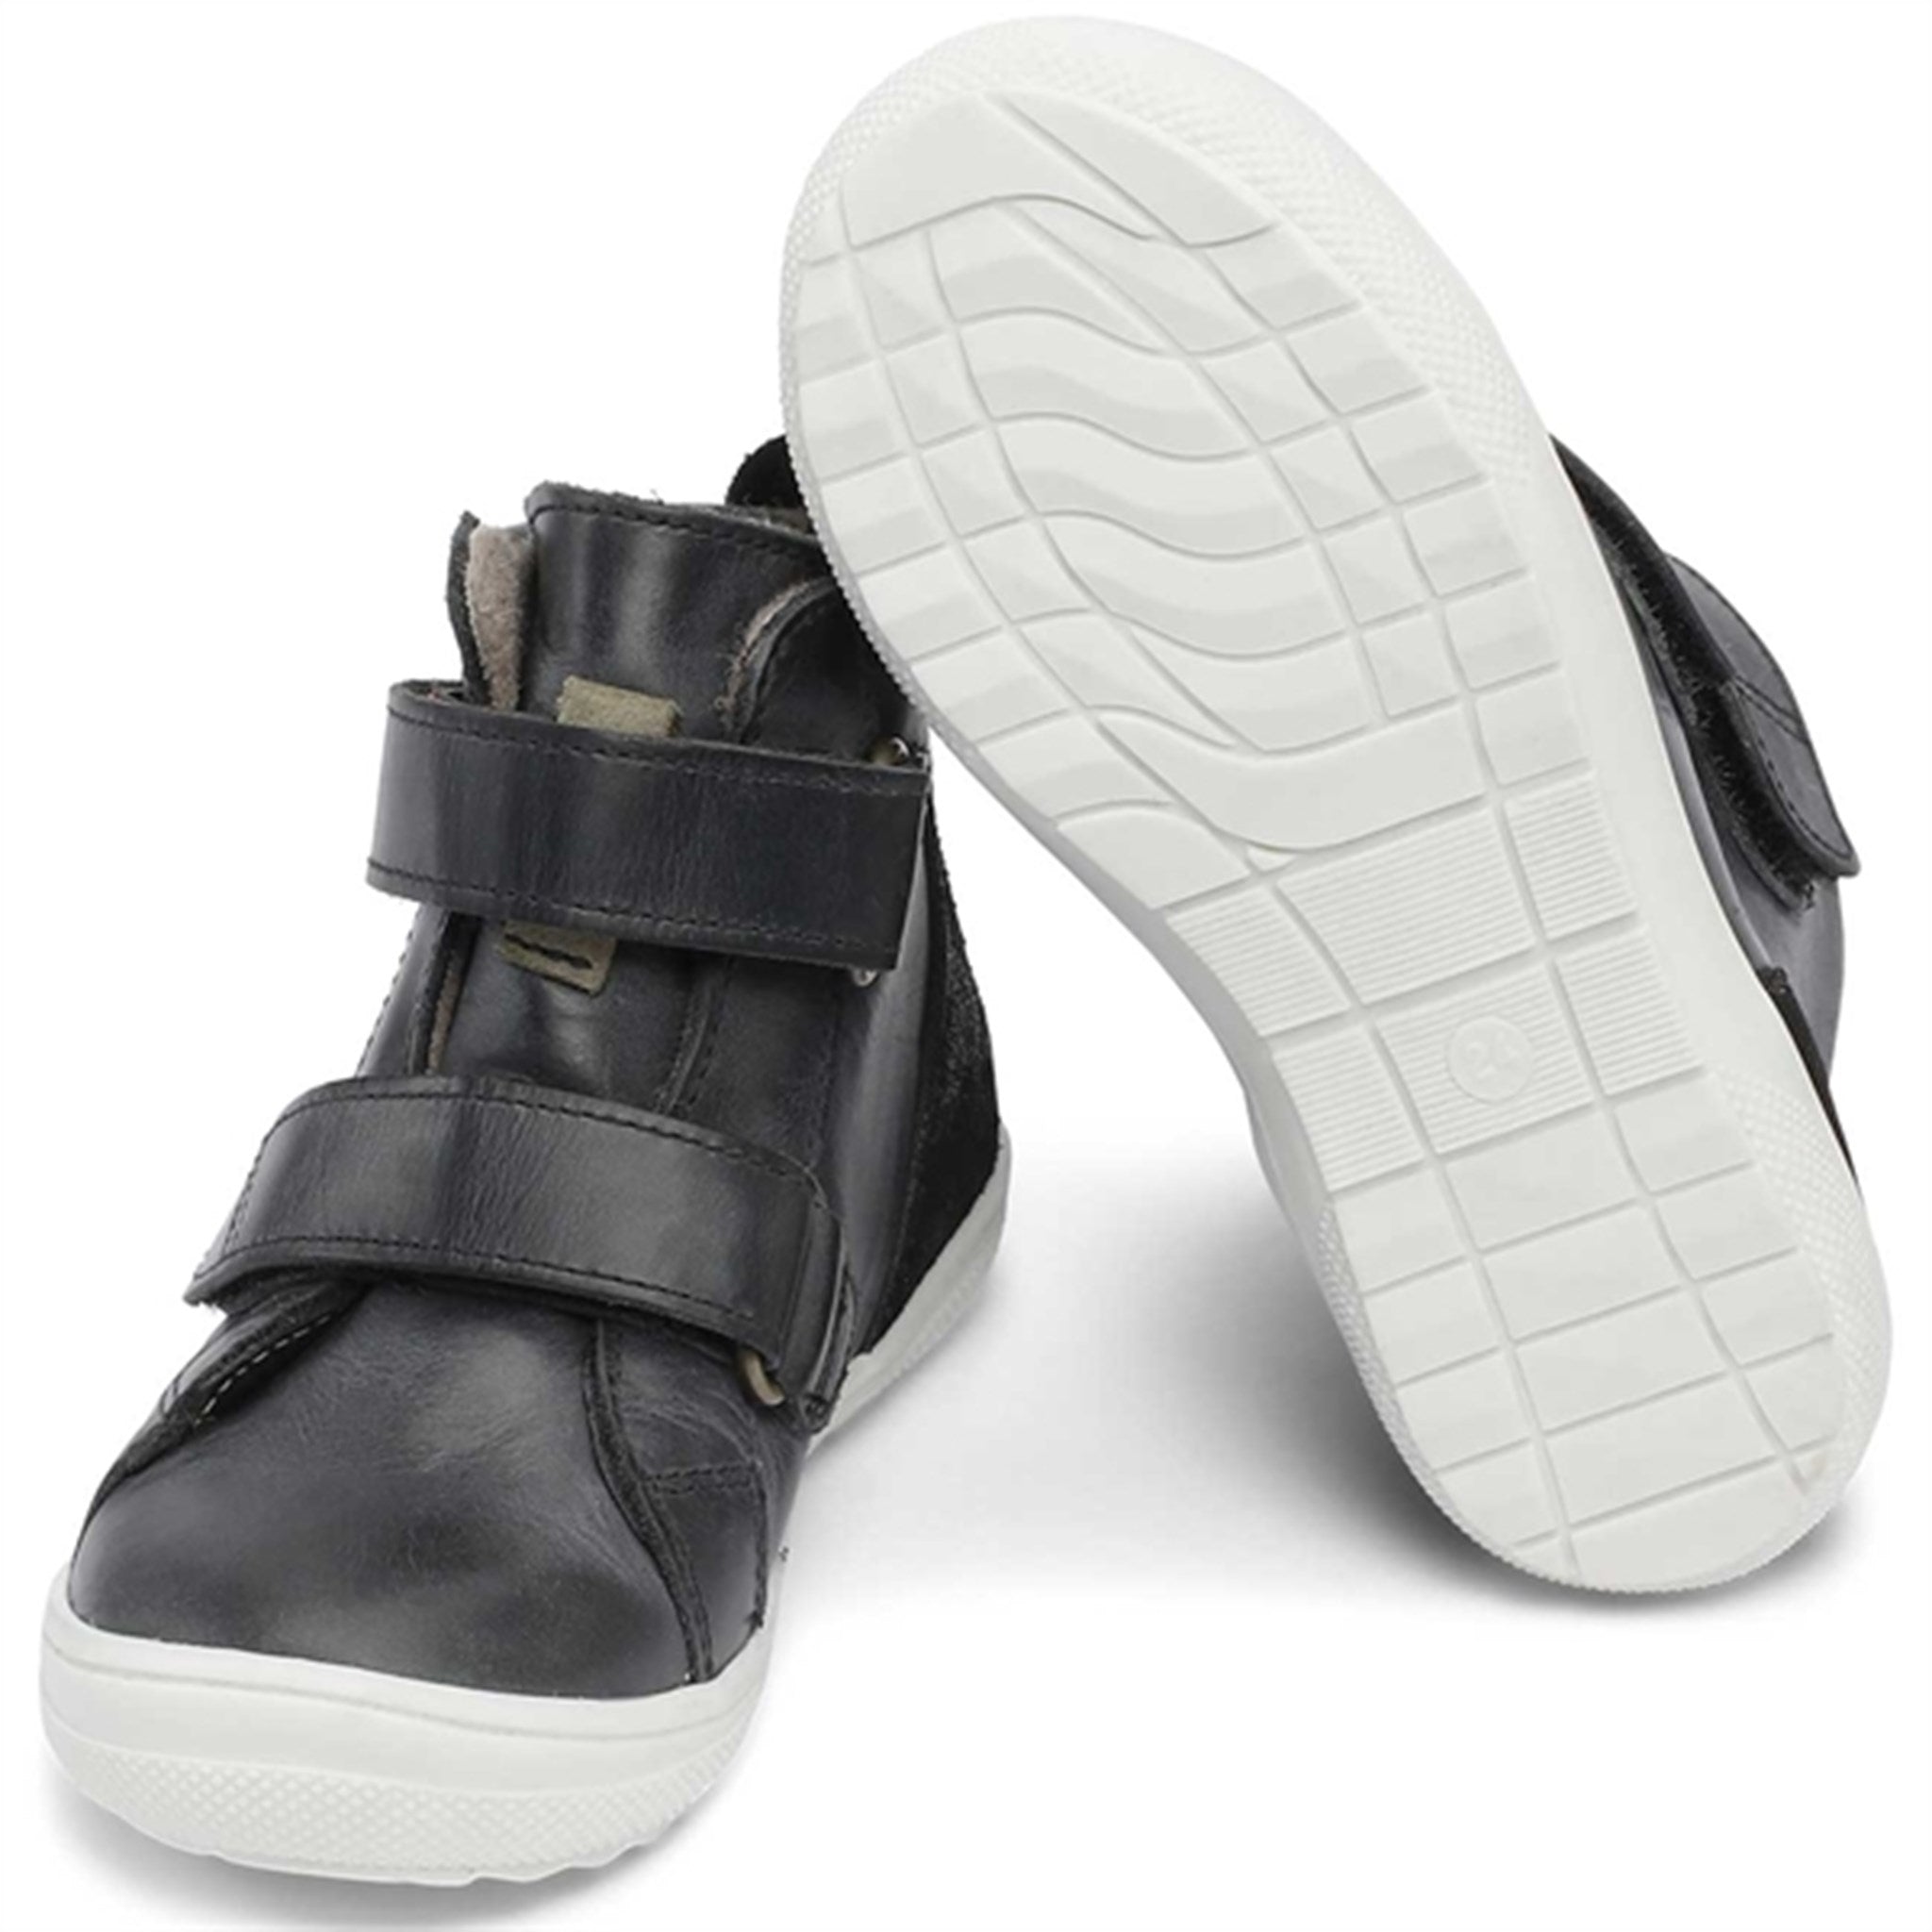 Bundgaard Storm Velcro Tex Shoes Black 3